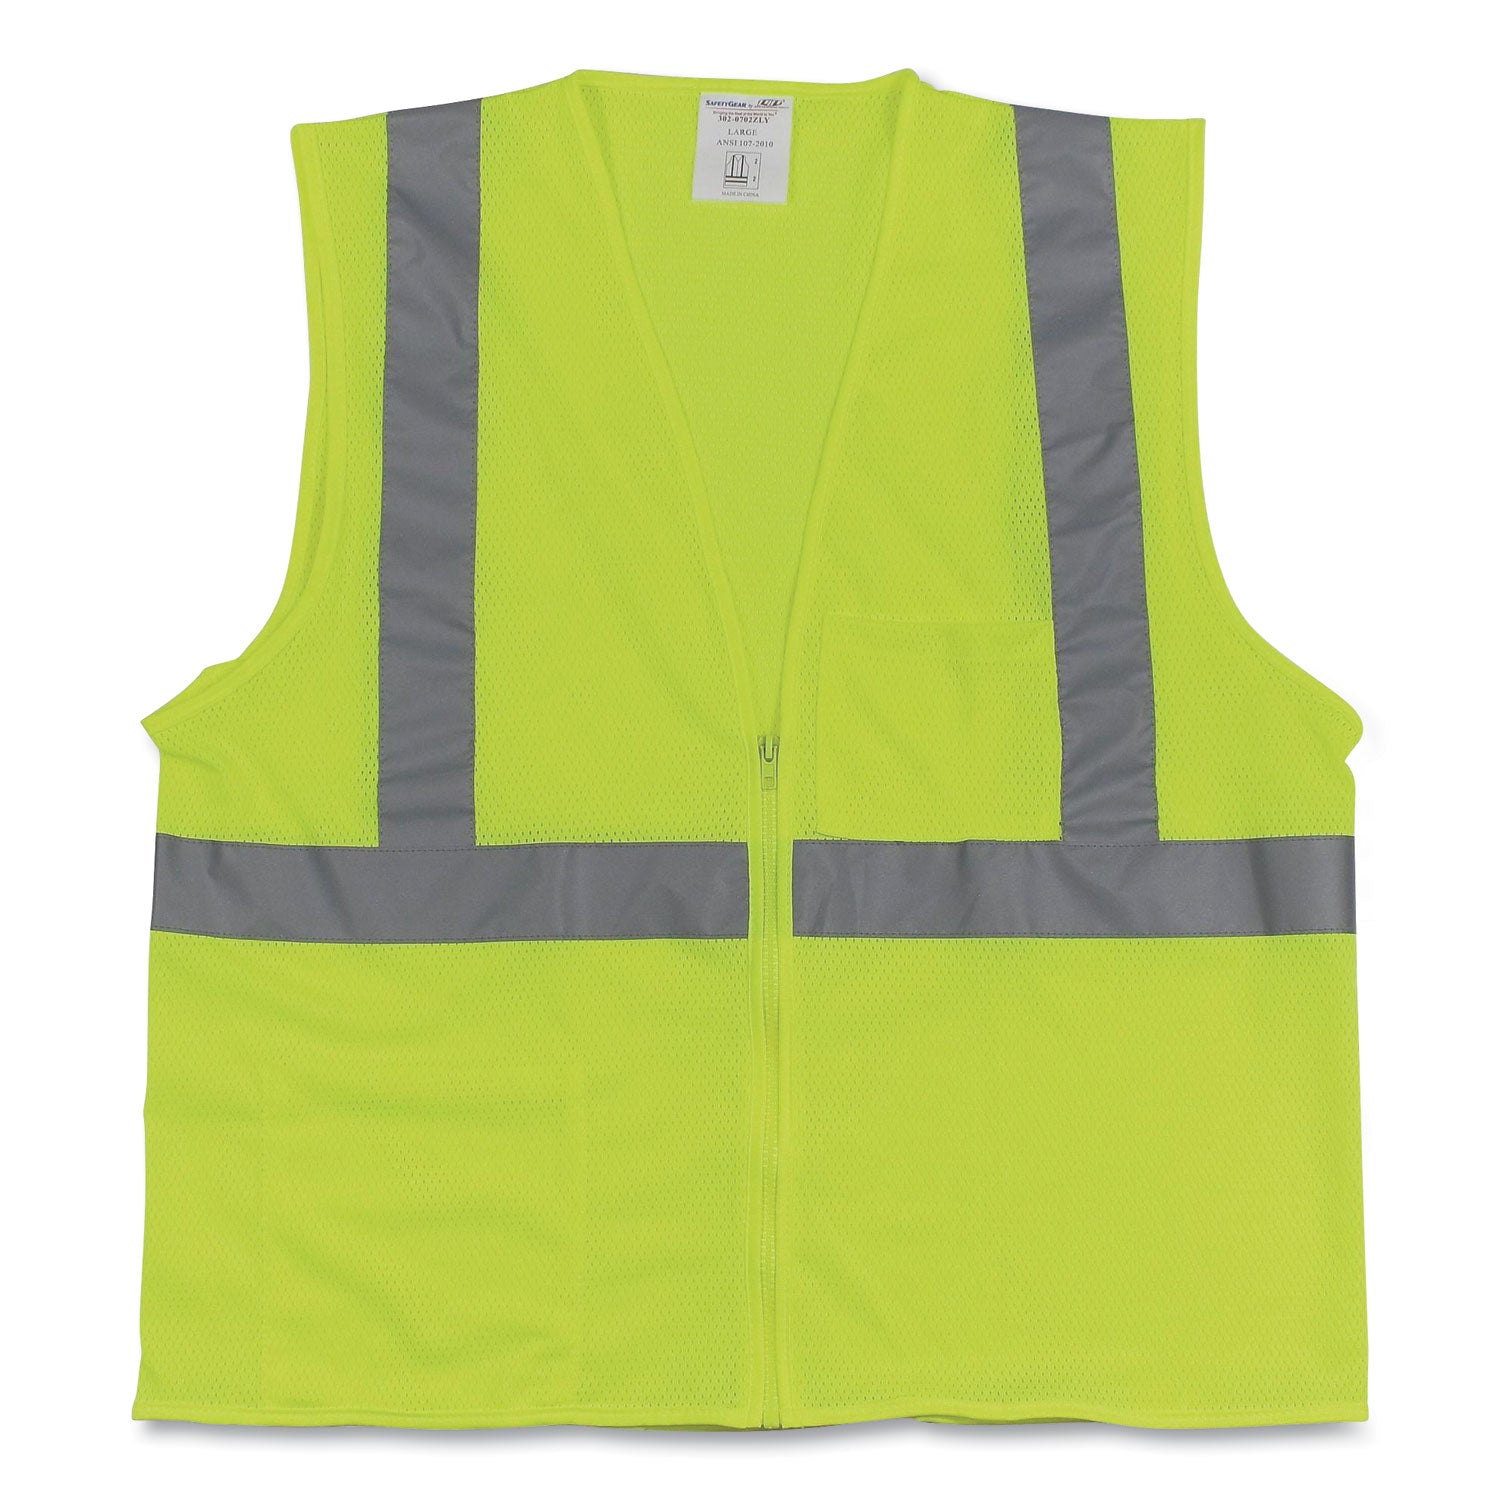 ansi-class-2-two-pocket-zipper-mesh-safety-vest-x-large-hi-viz-lime-yellow_pid3020702zlyxl - 1